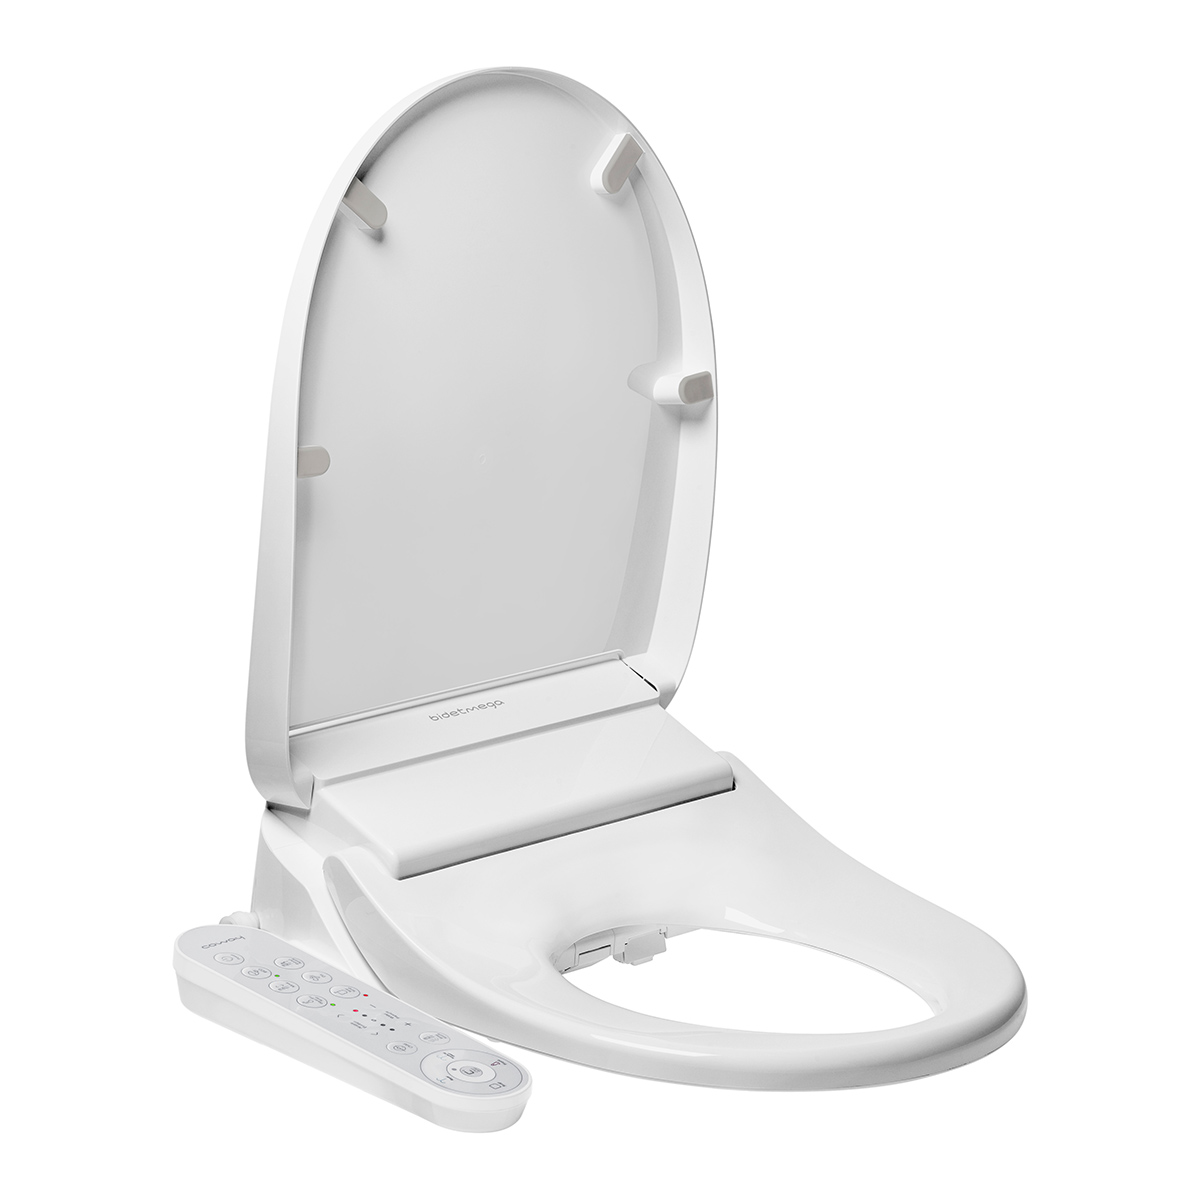 Coway Bidetmega 200 Smart Electronic Bidet Seat with Innovative i-WAVE Technology For Rounded Toilet Bowl - image 2 of 6